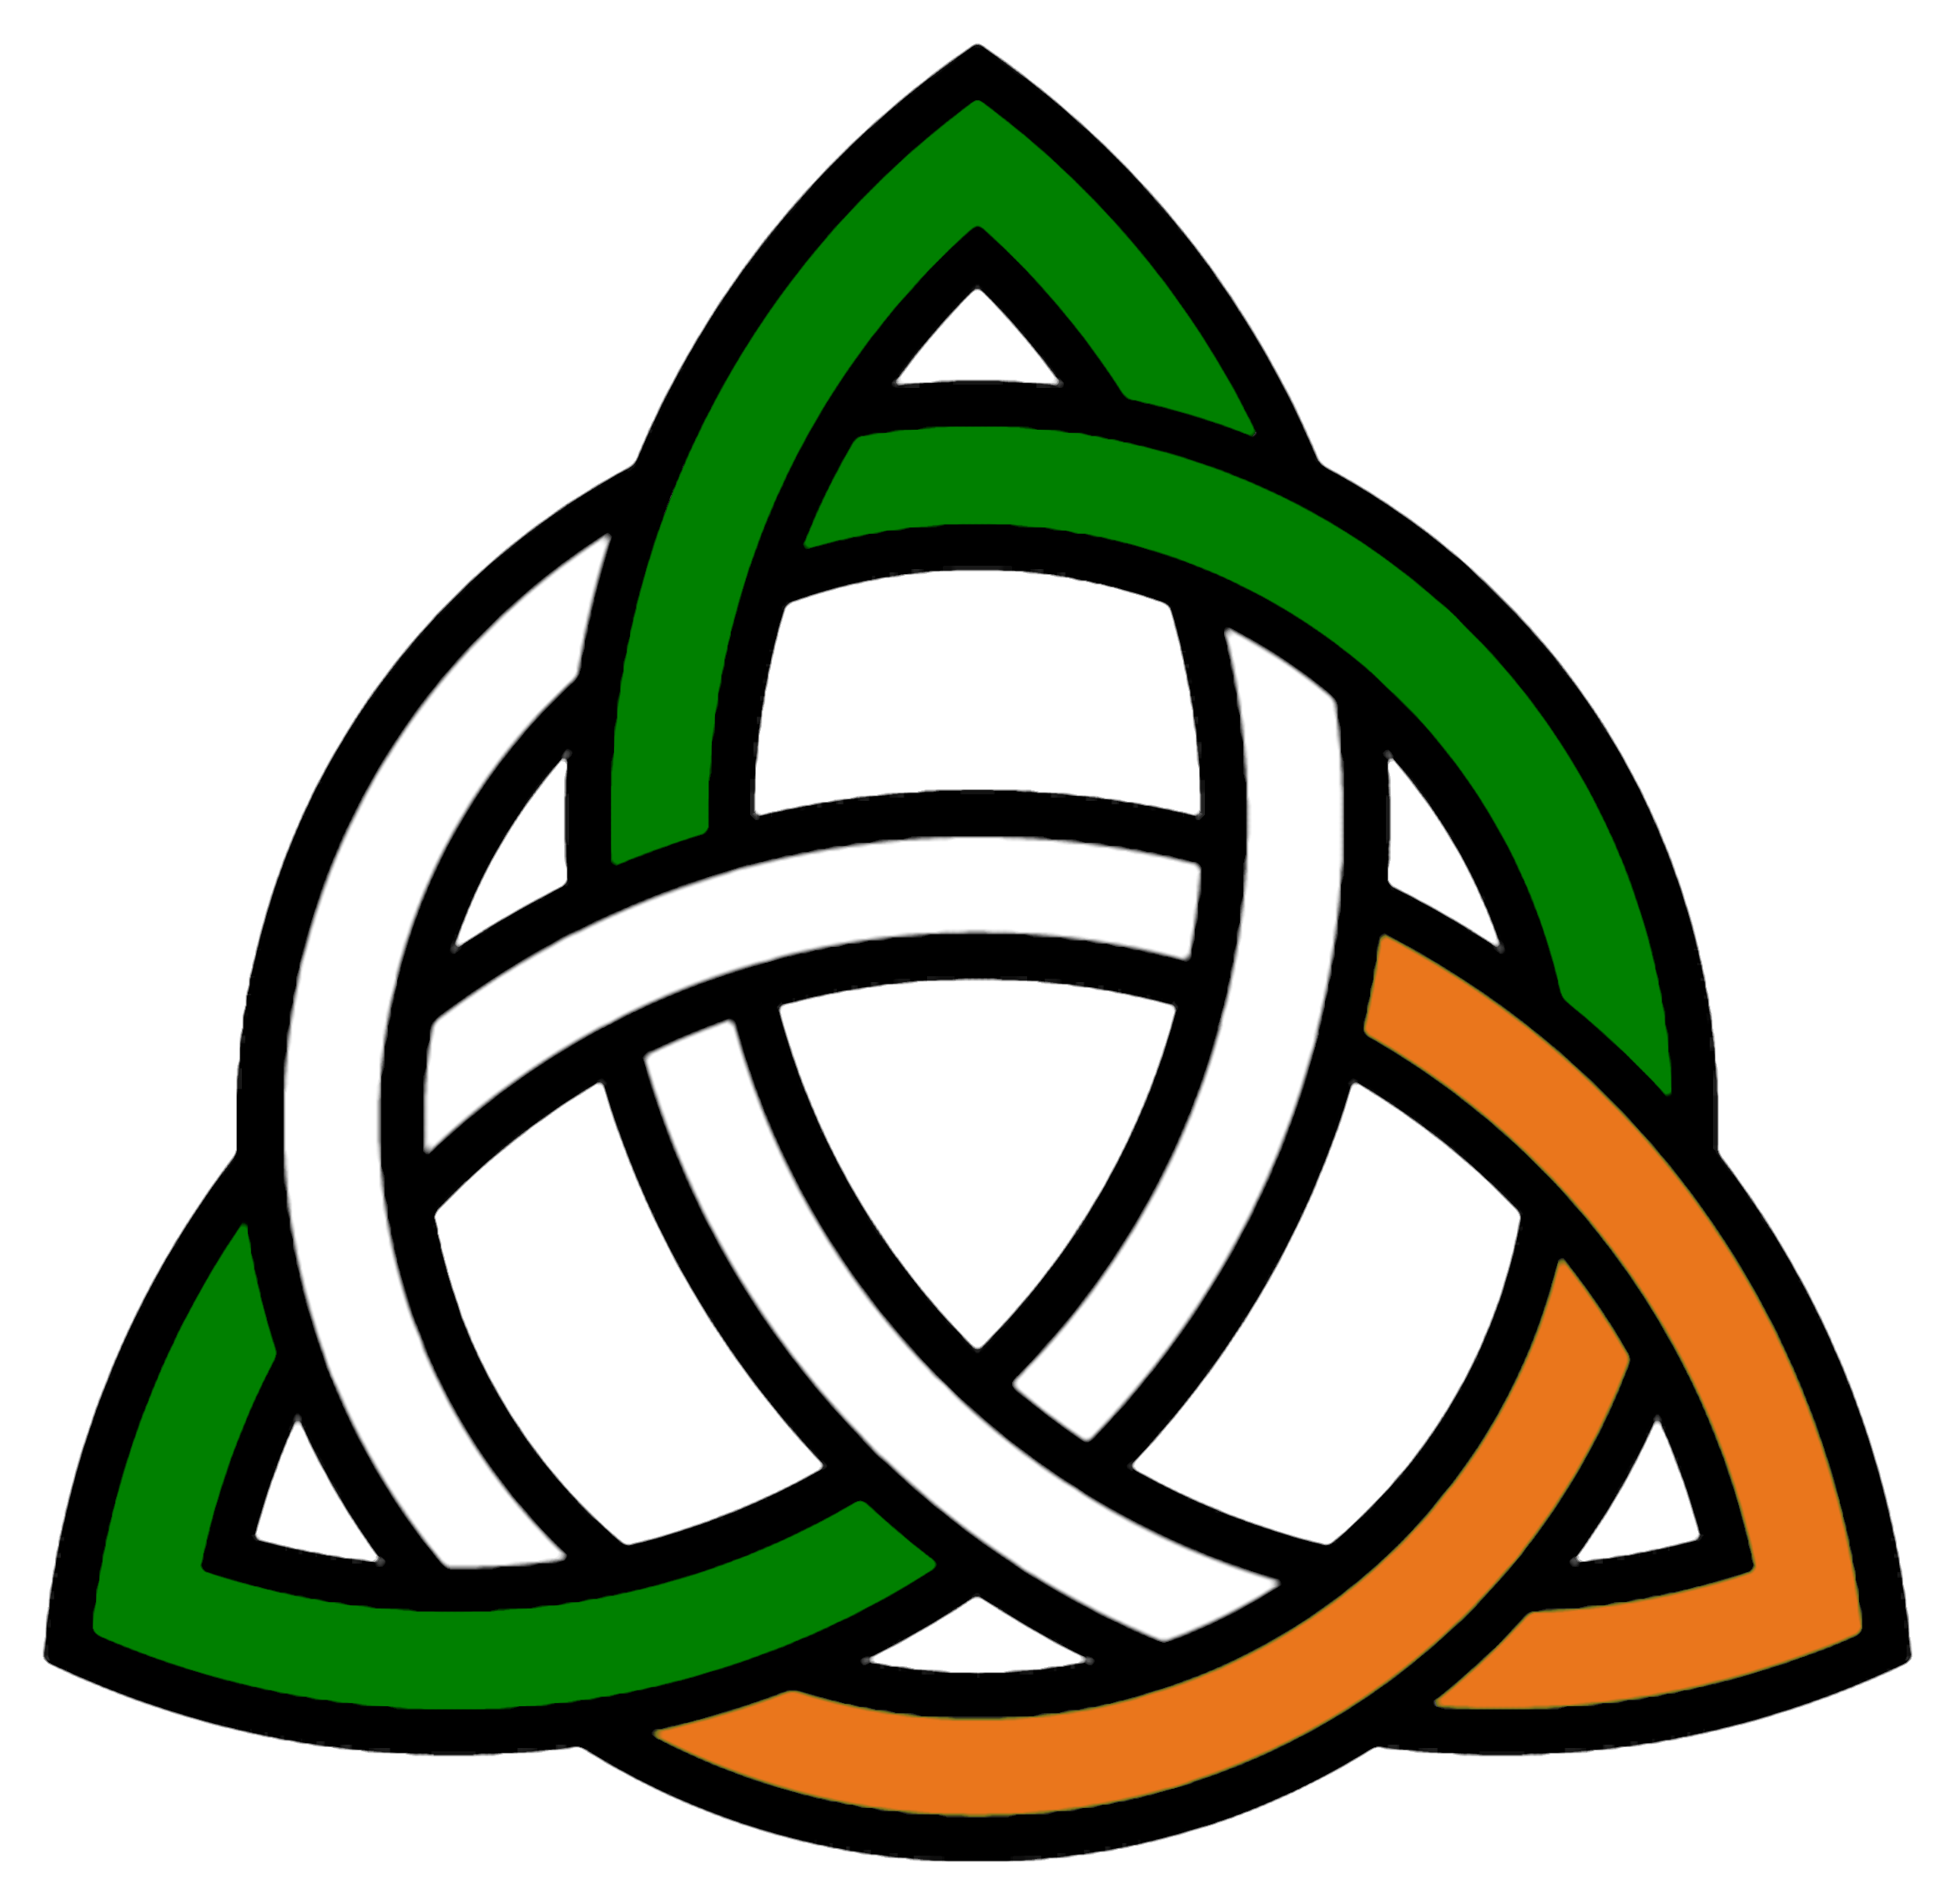 Celtic Trinity Knot Clipart Irish Knot Flag Image Vector